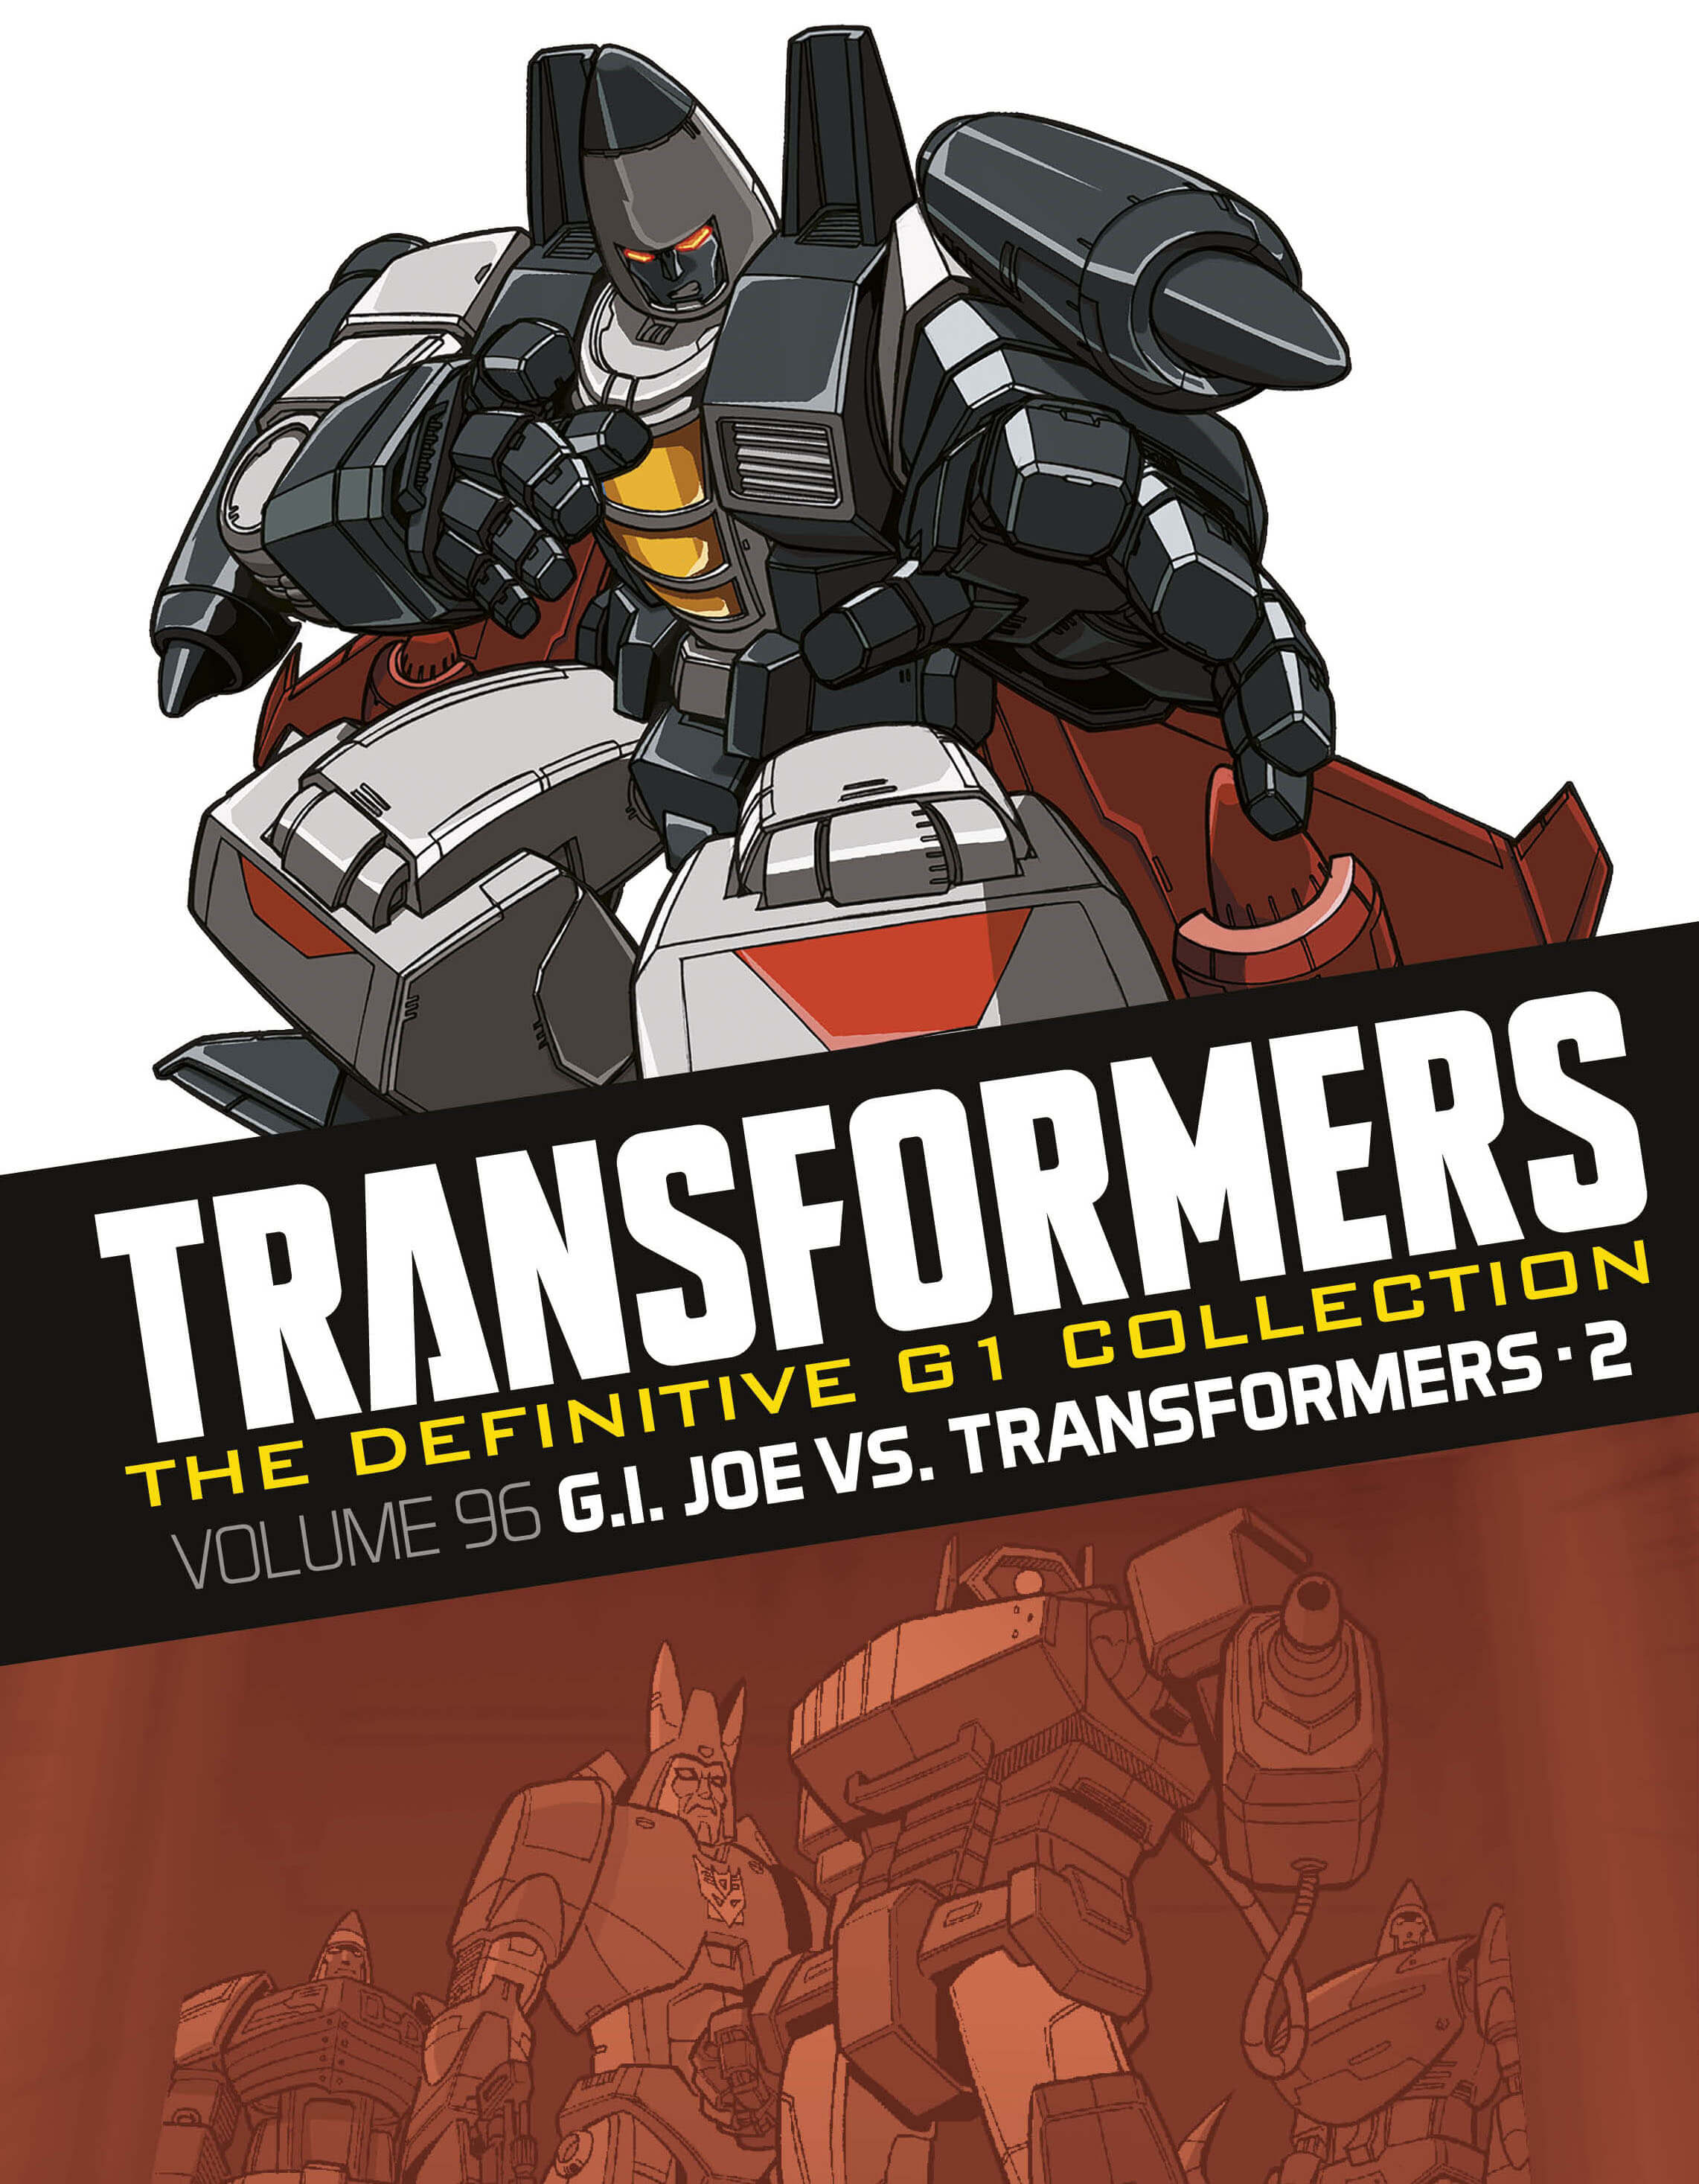 G.I.Joe v Transformers Pt.2